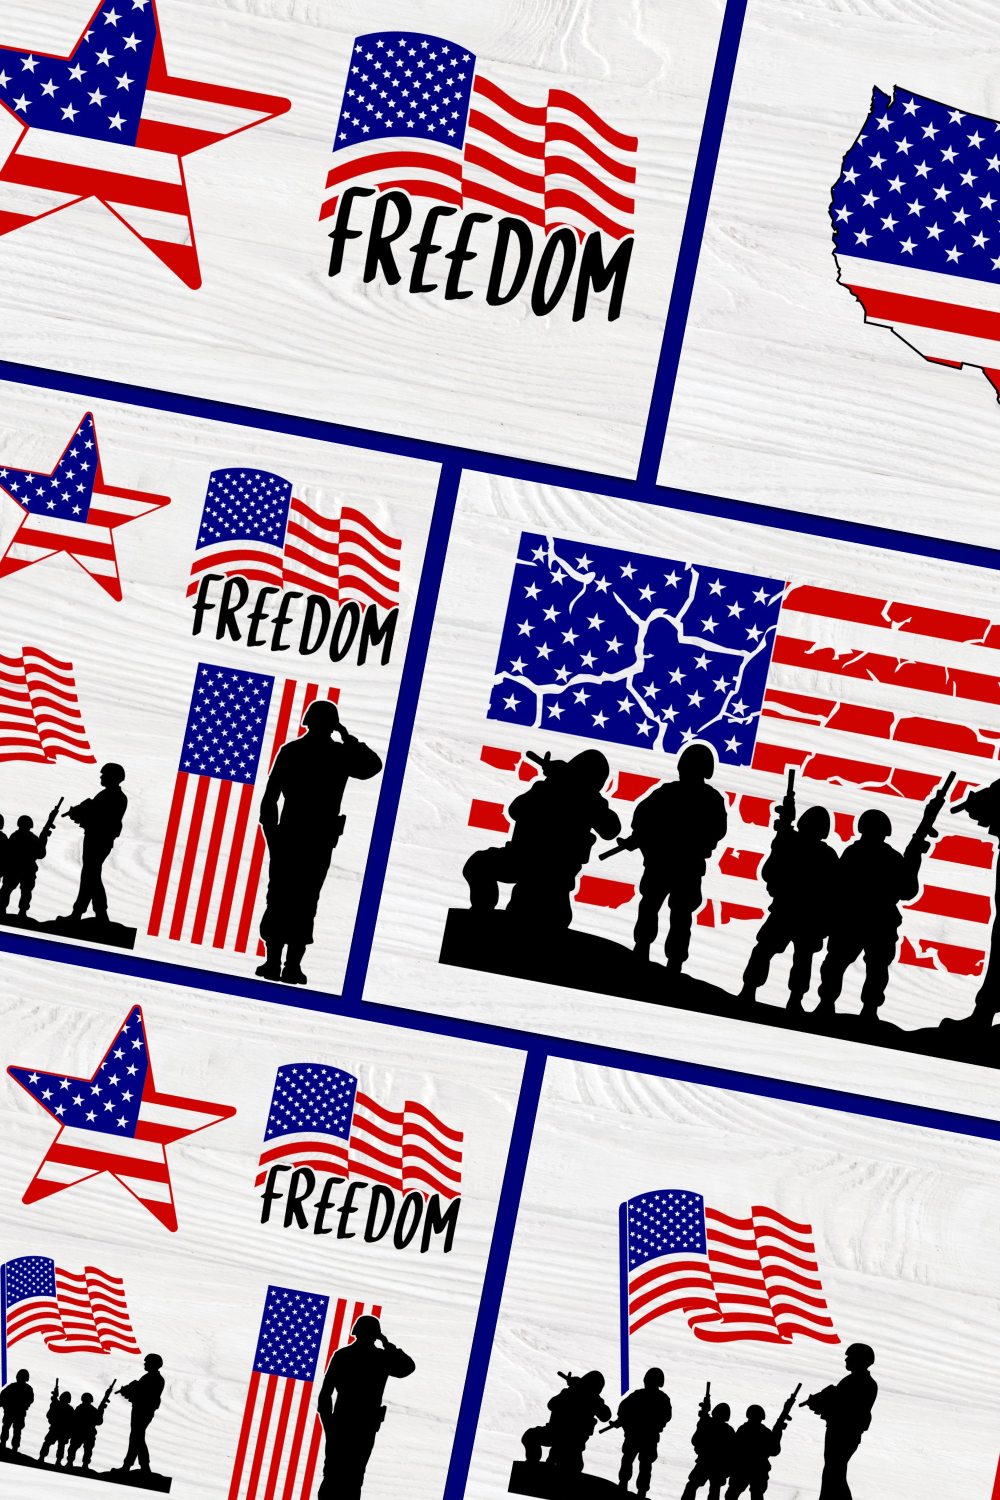 Beautiful American flag themed prints.